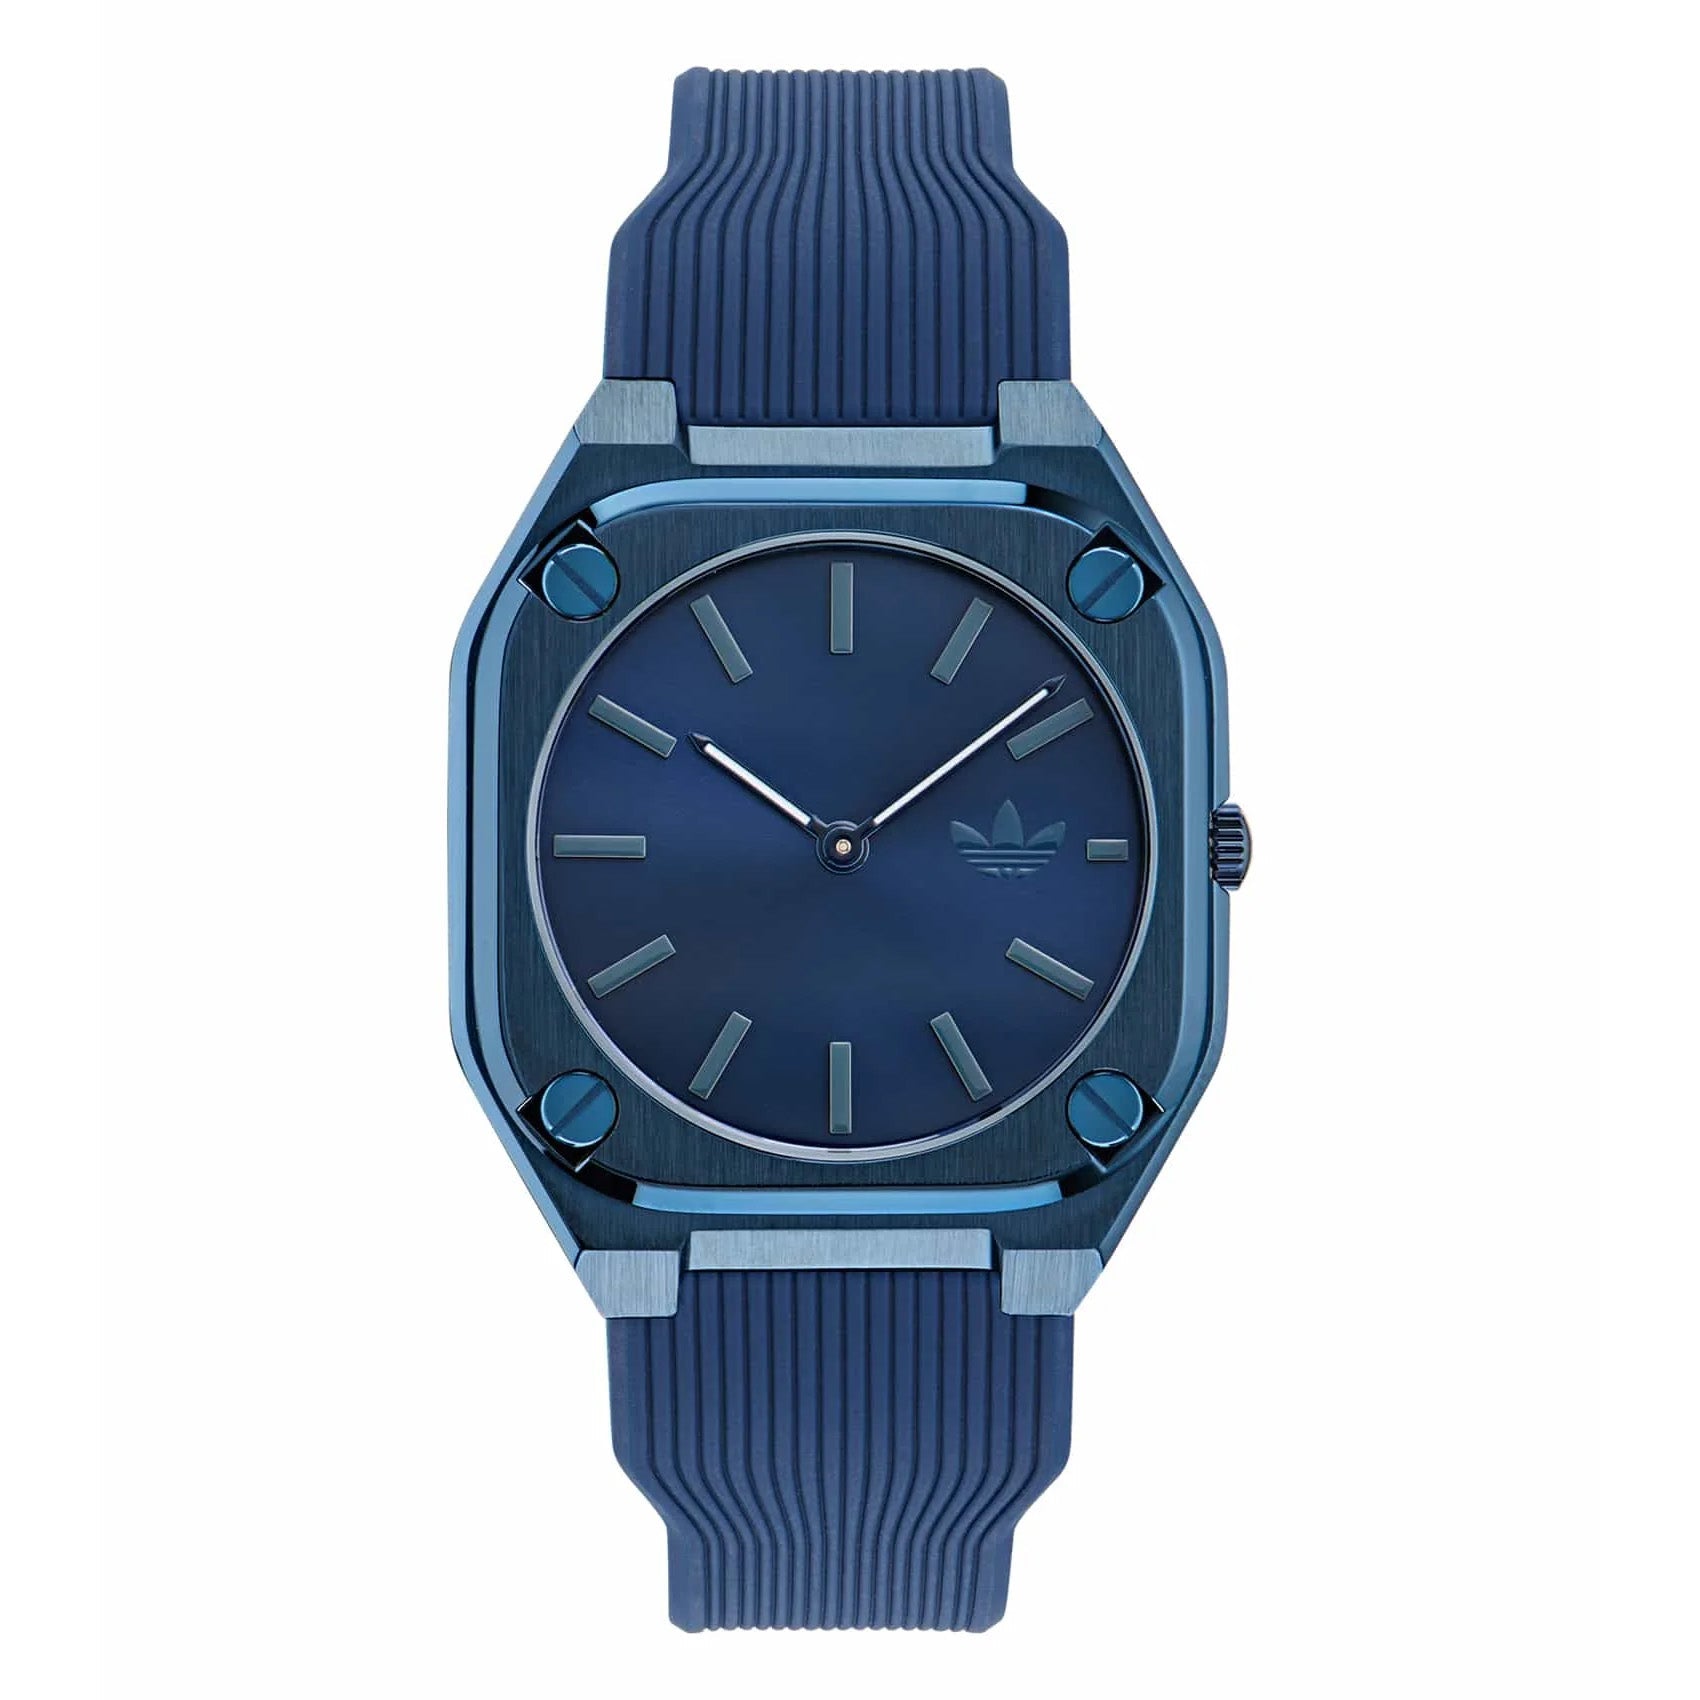 Adidas Originals City Tech Thin Unisex Blue Watch AOFH24001